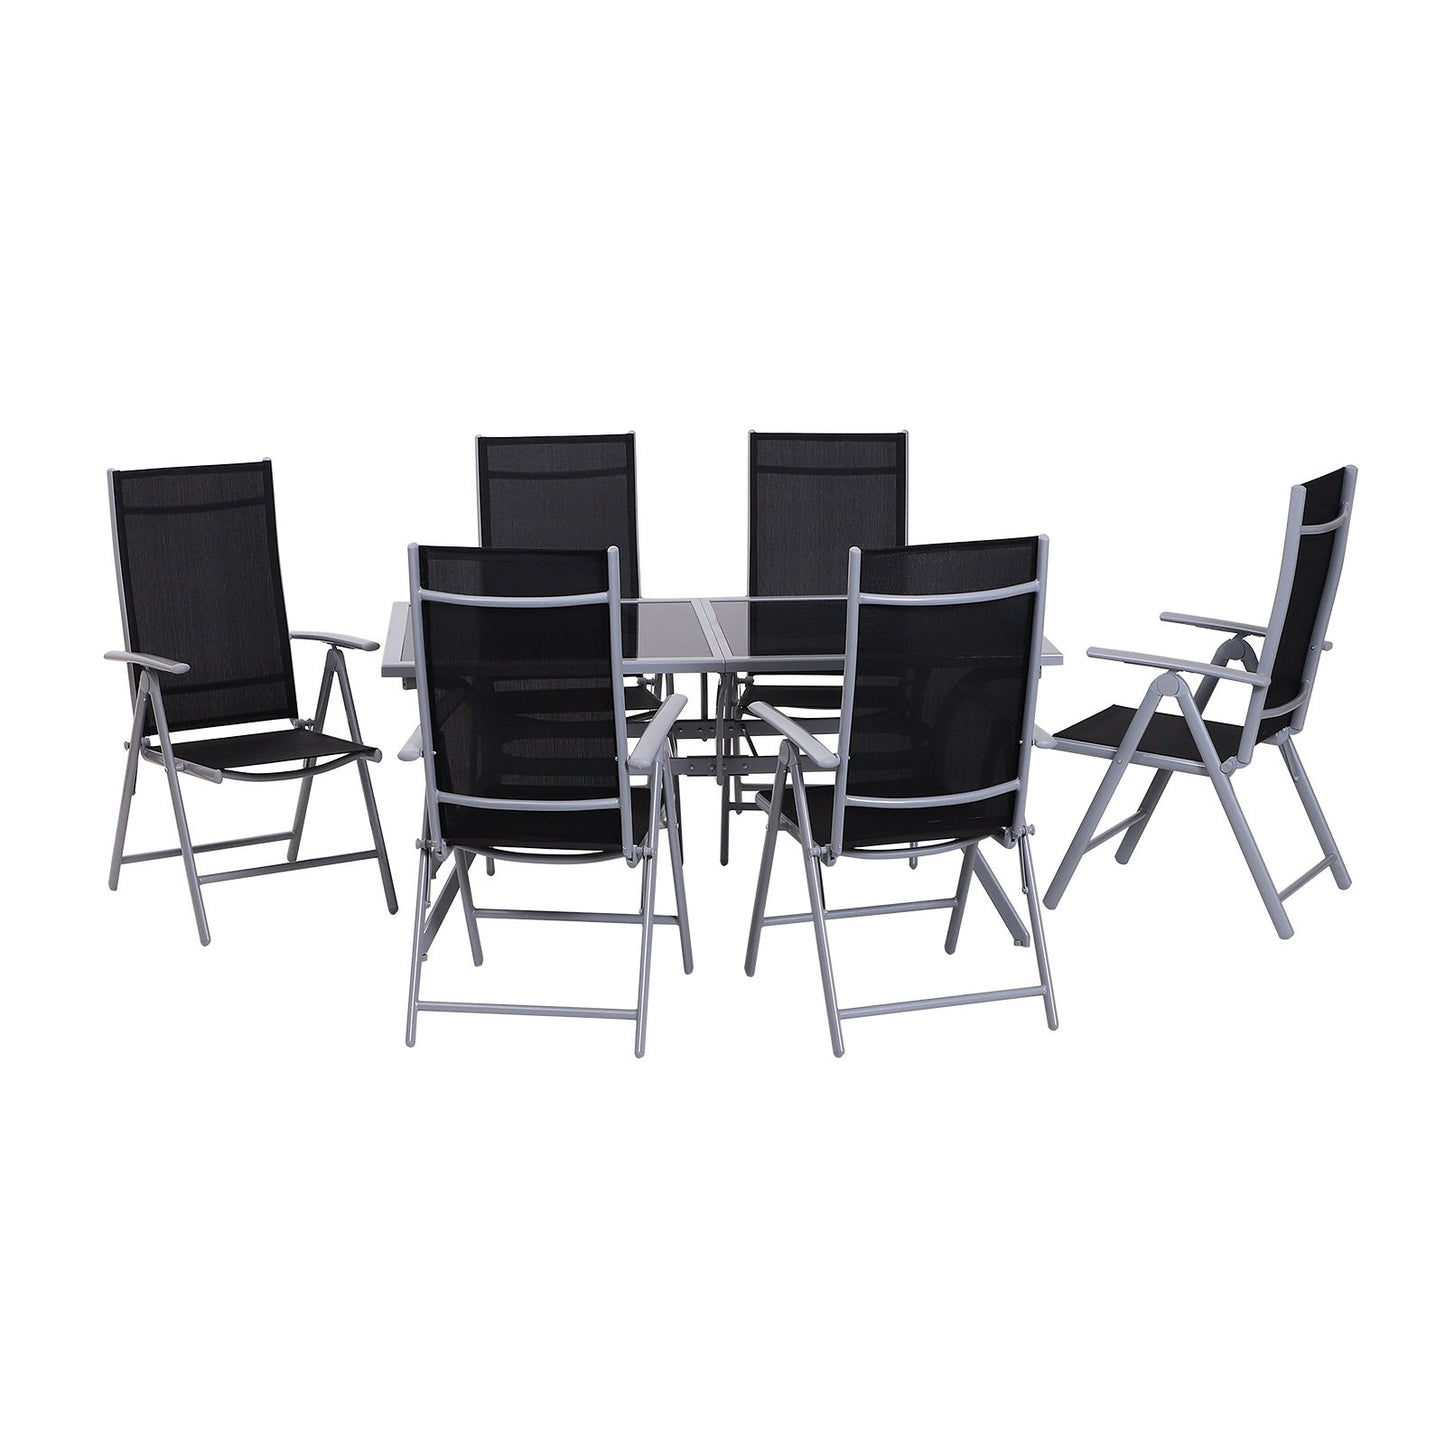 Nancy's Rouen Garden set for 6 people - Garden table - Garden chairs - 7-piece set - Black